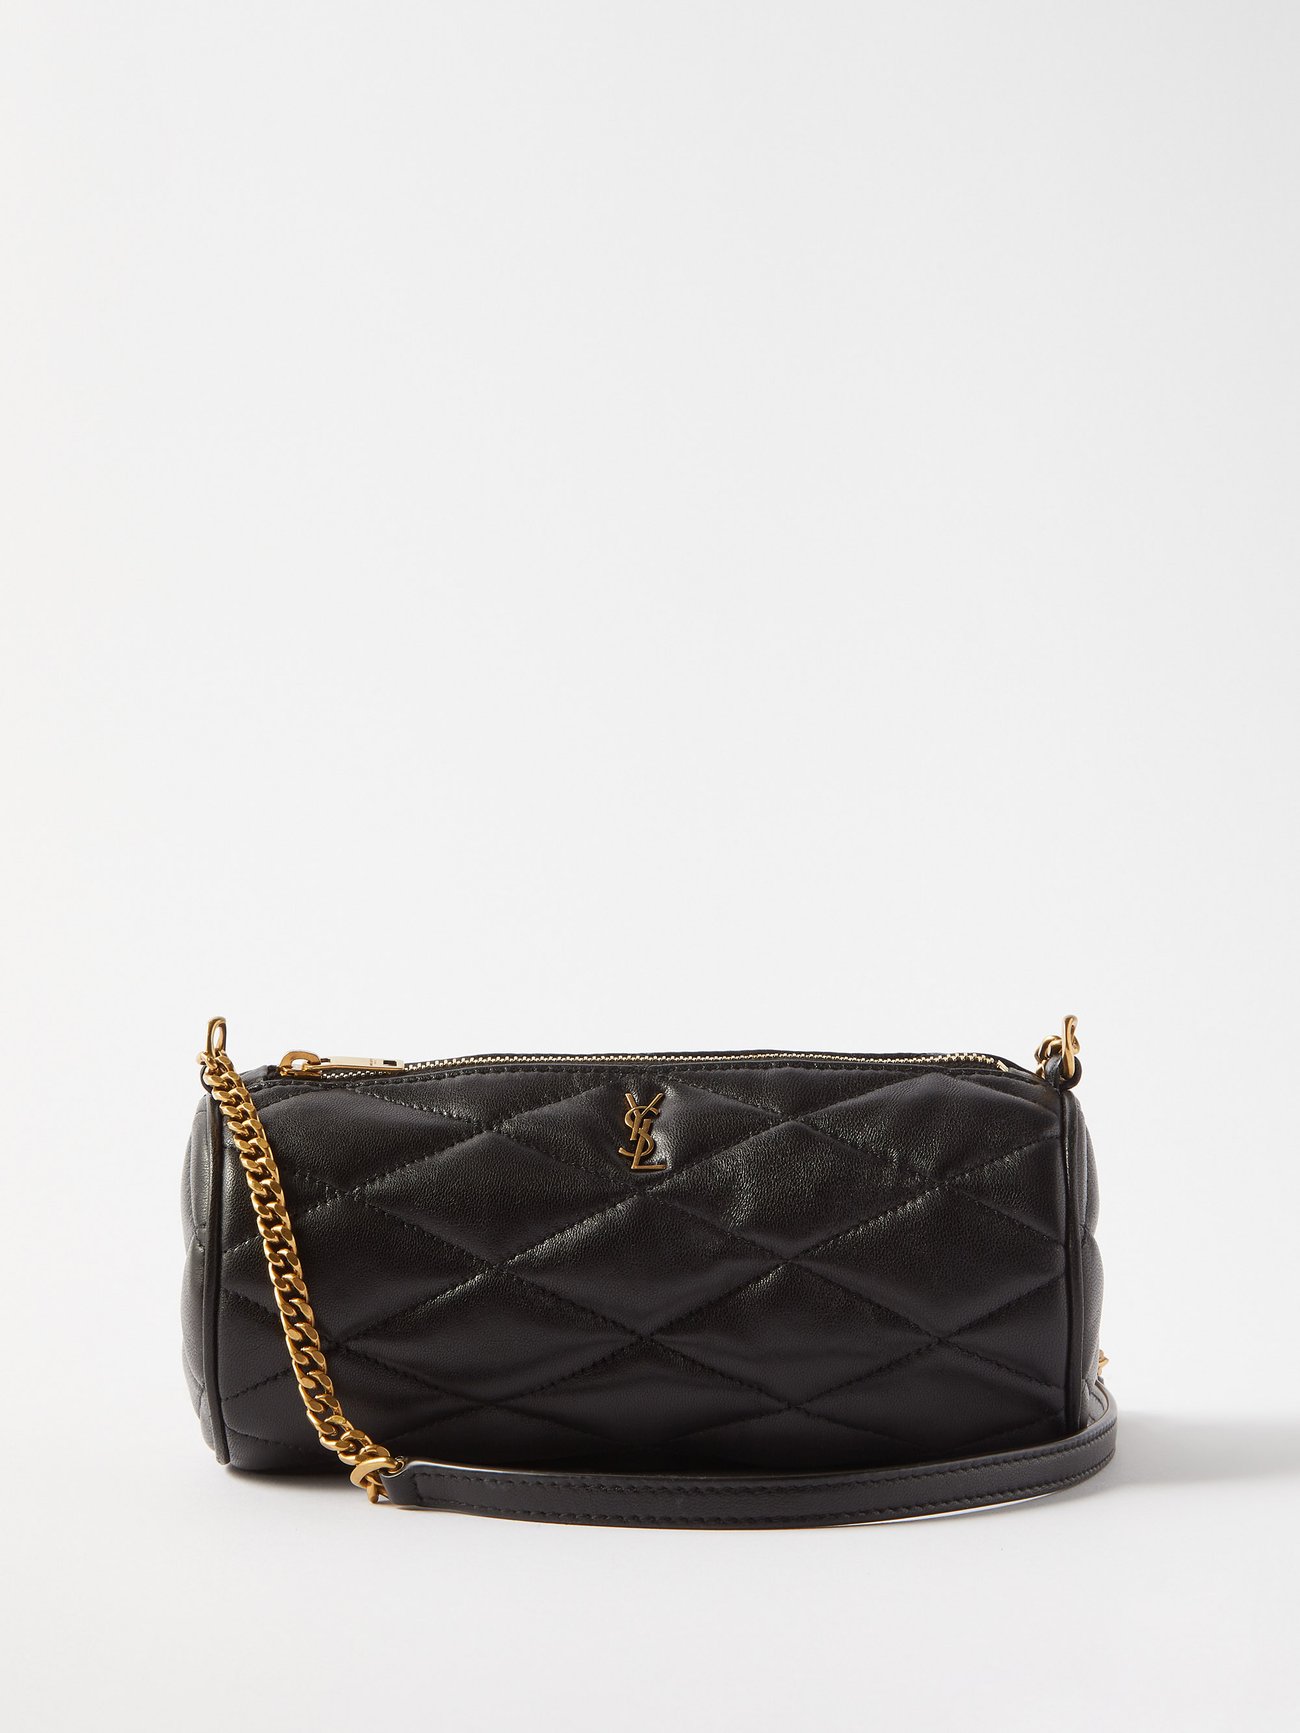 Where should I buy a Louis Vuitton handbag in Paris to get the best deal? -  Quora